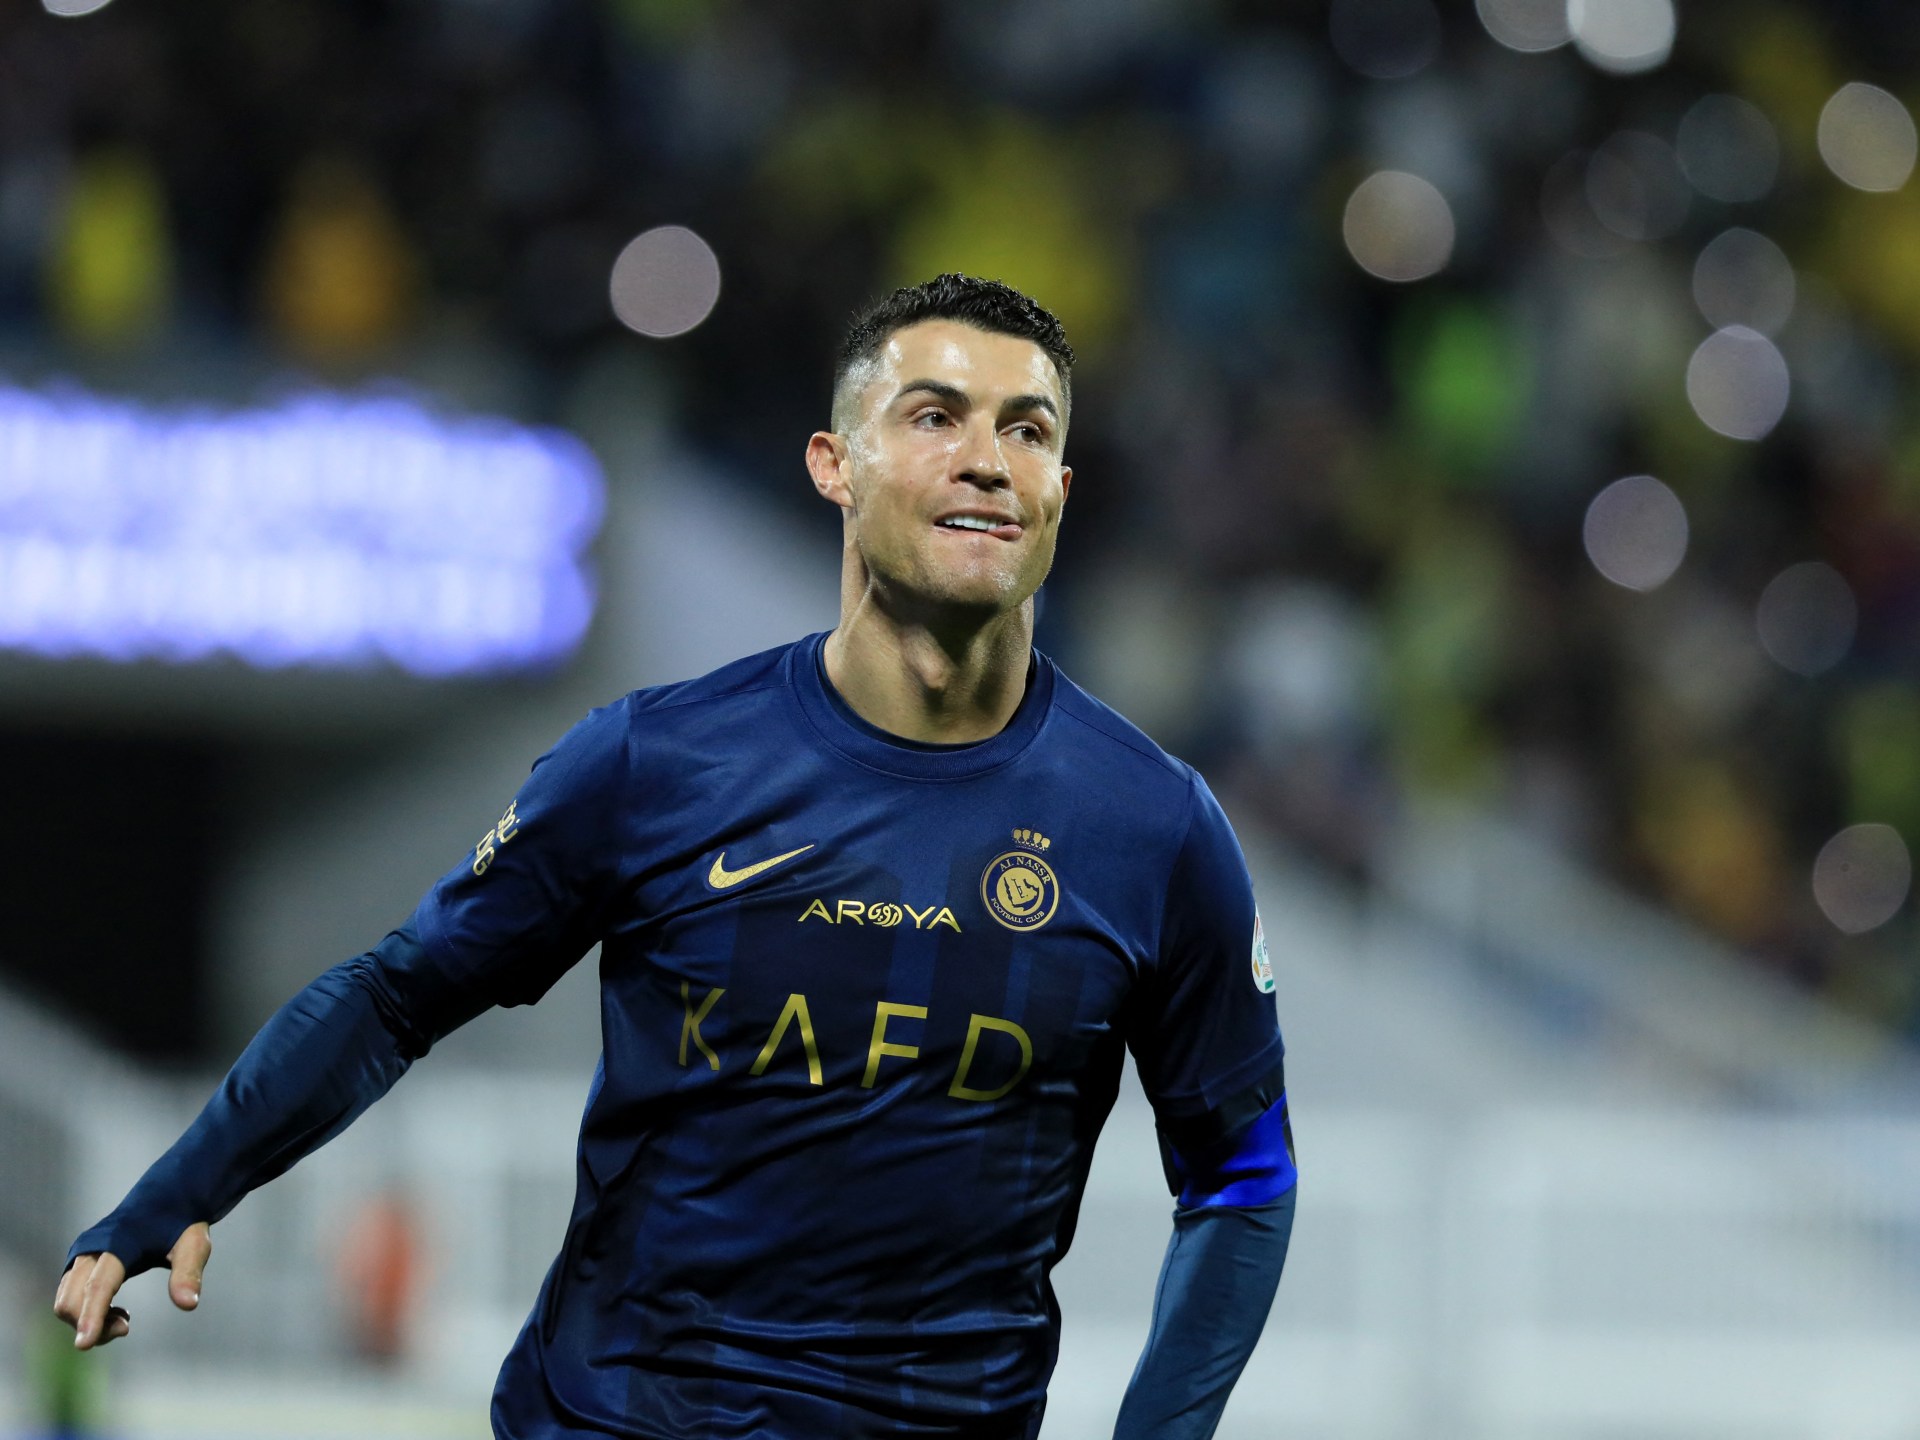 Ronaldo scores second hat-trick in 3 days in Al Nassr’s Saudi league win | Football News